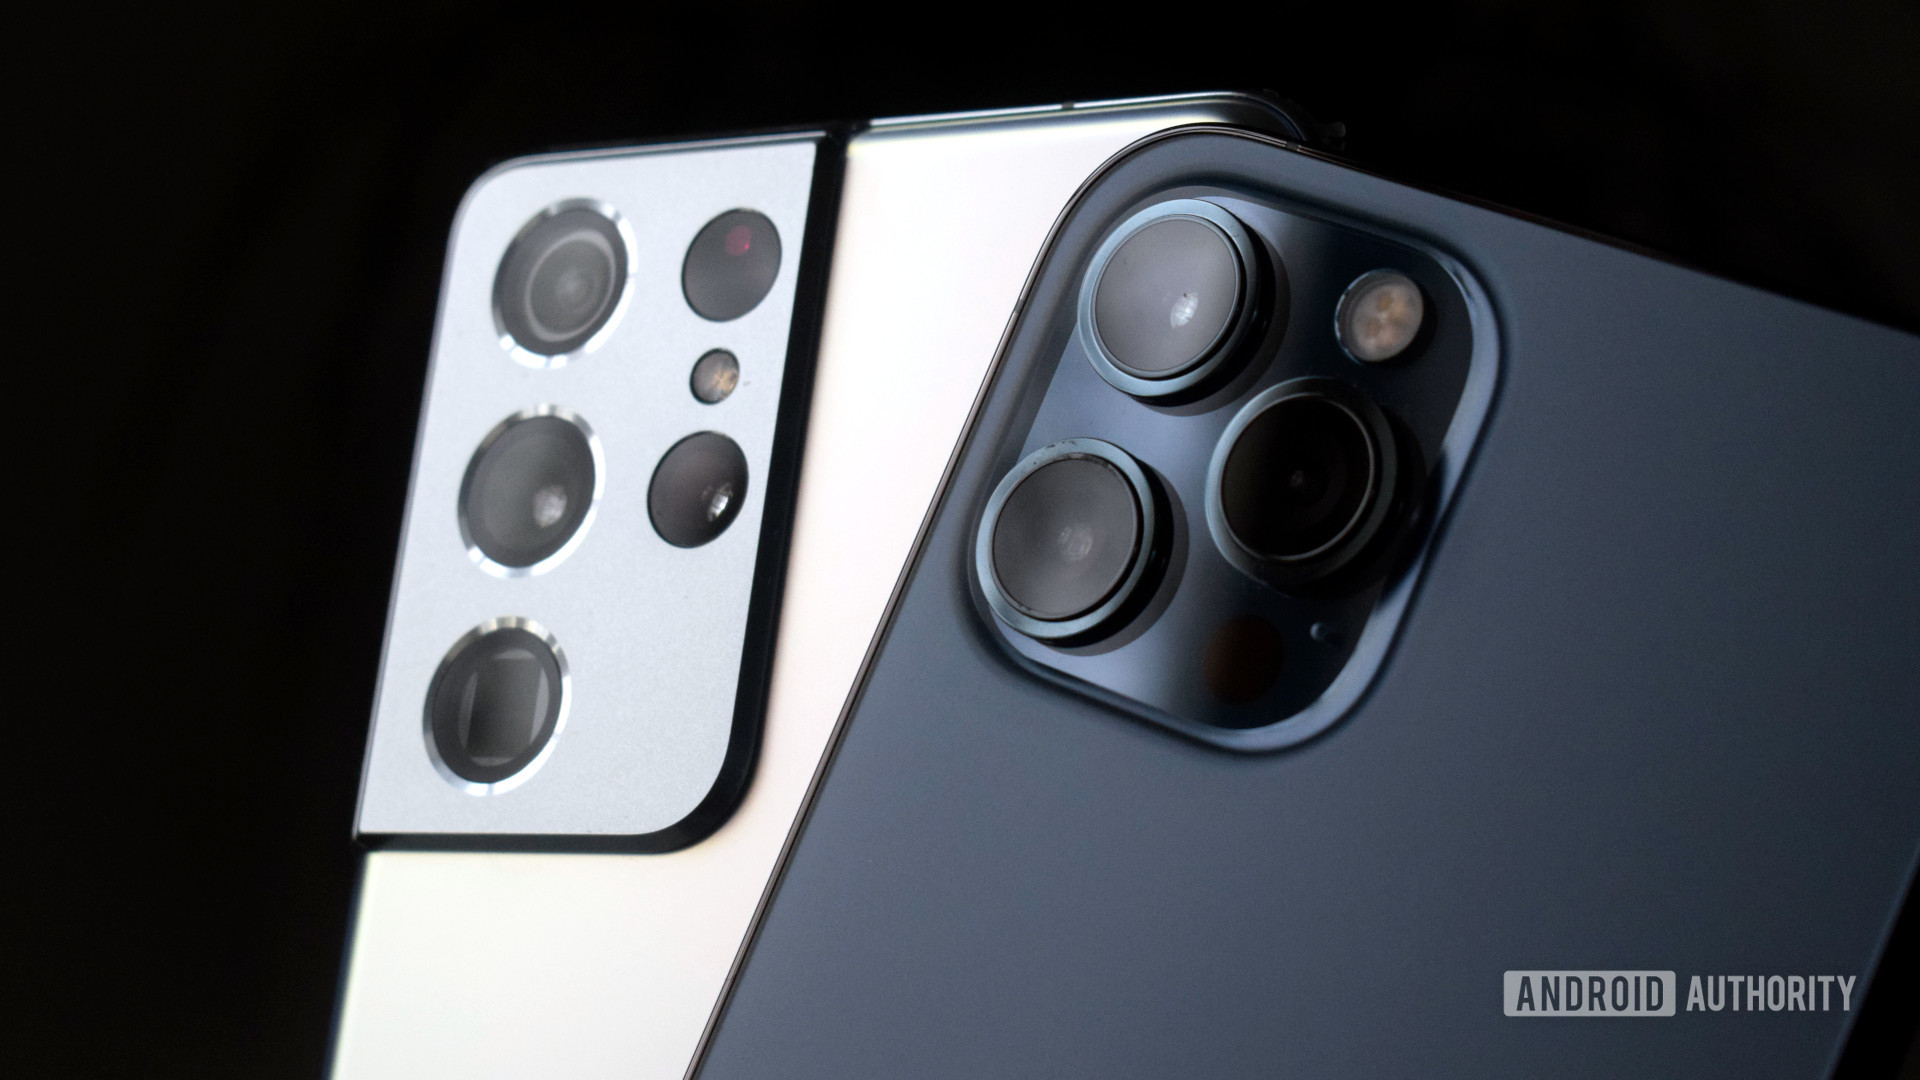 Galaxy S21 Ultra versus cámara del iPhone 12 Pro Max oscura